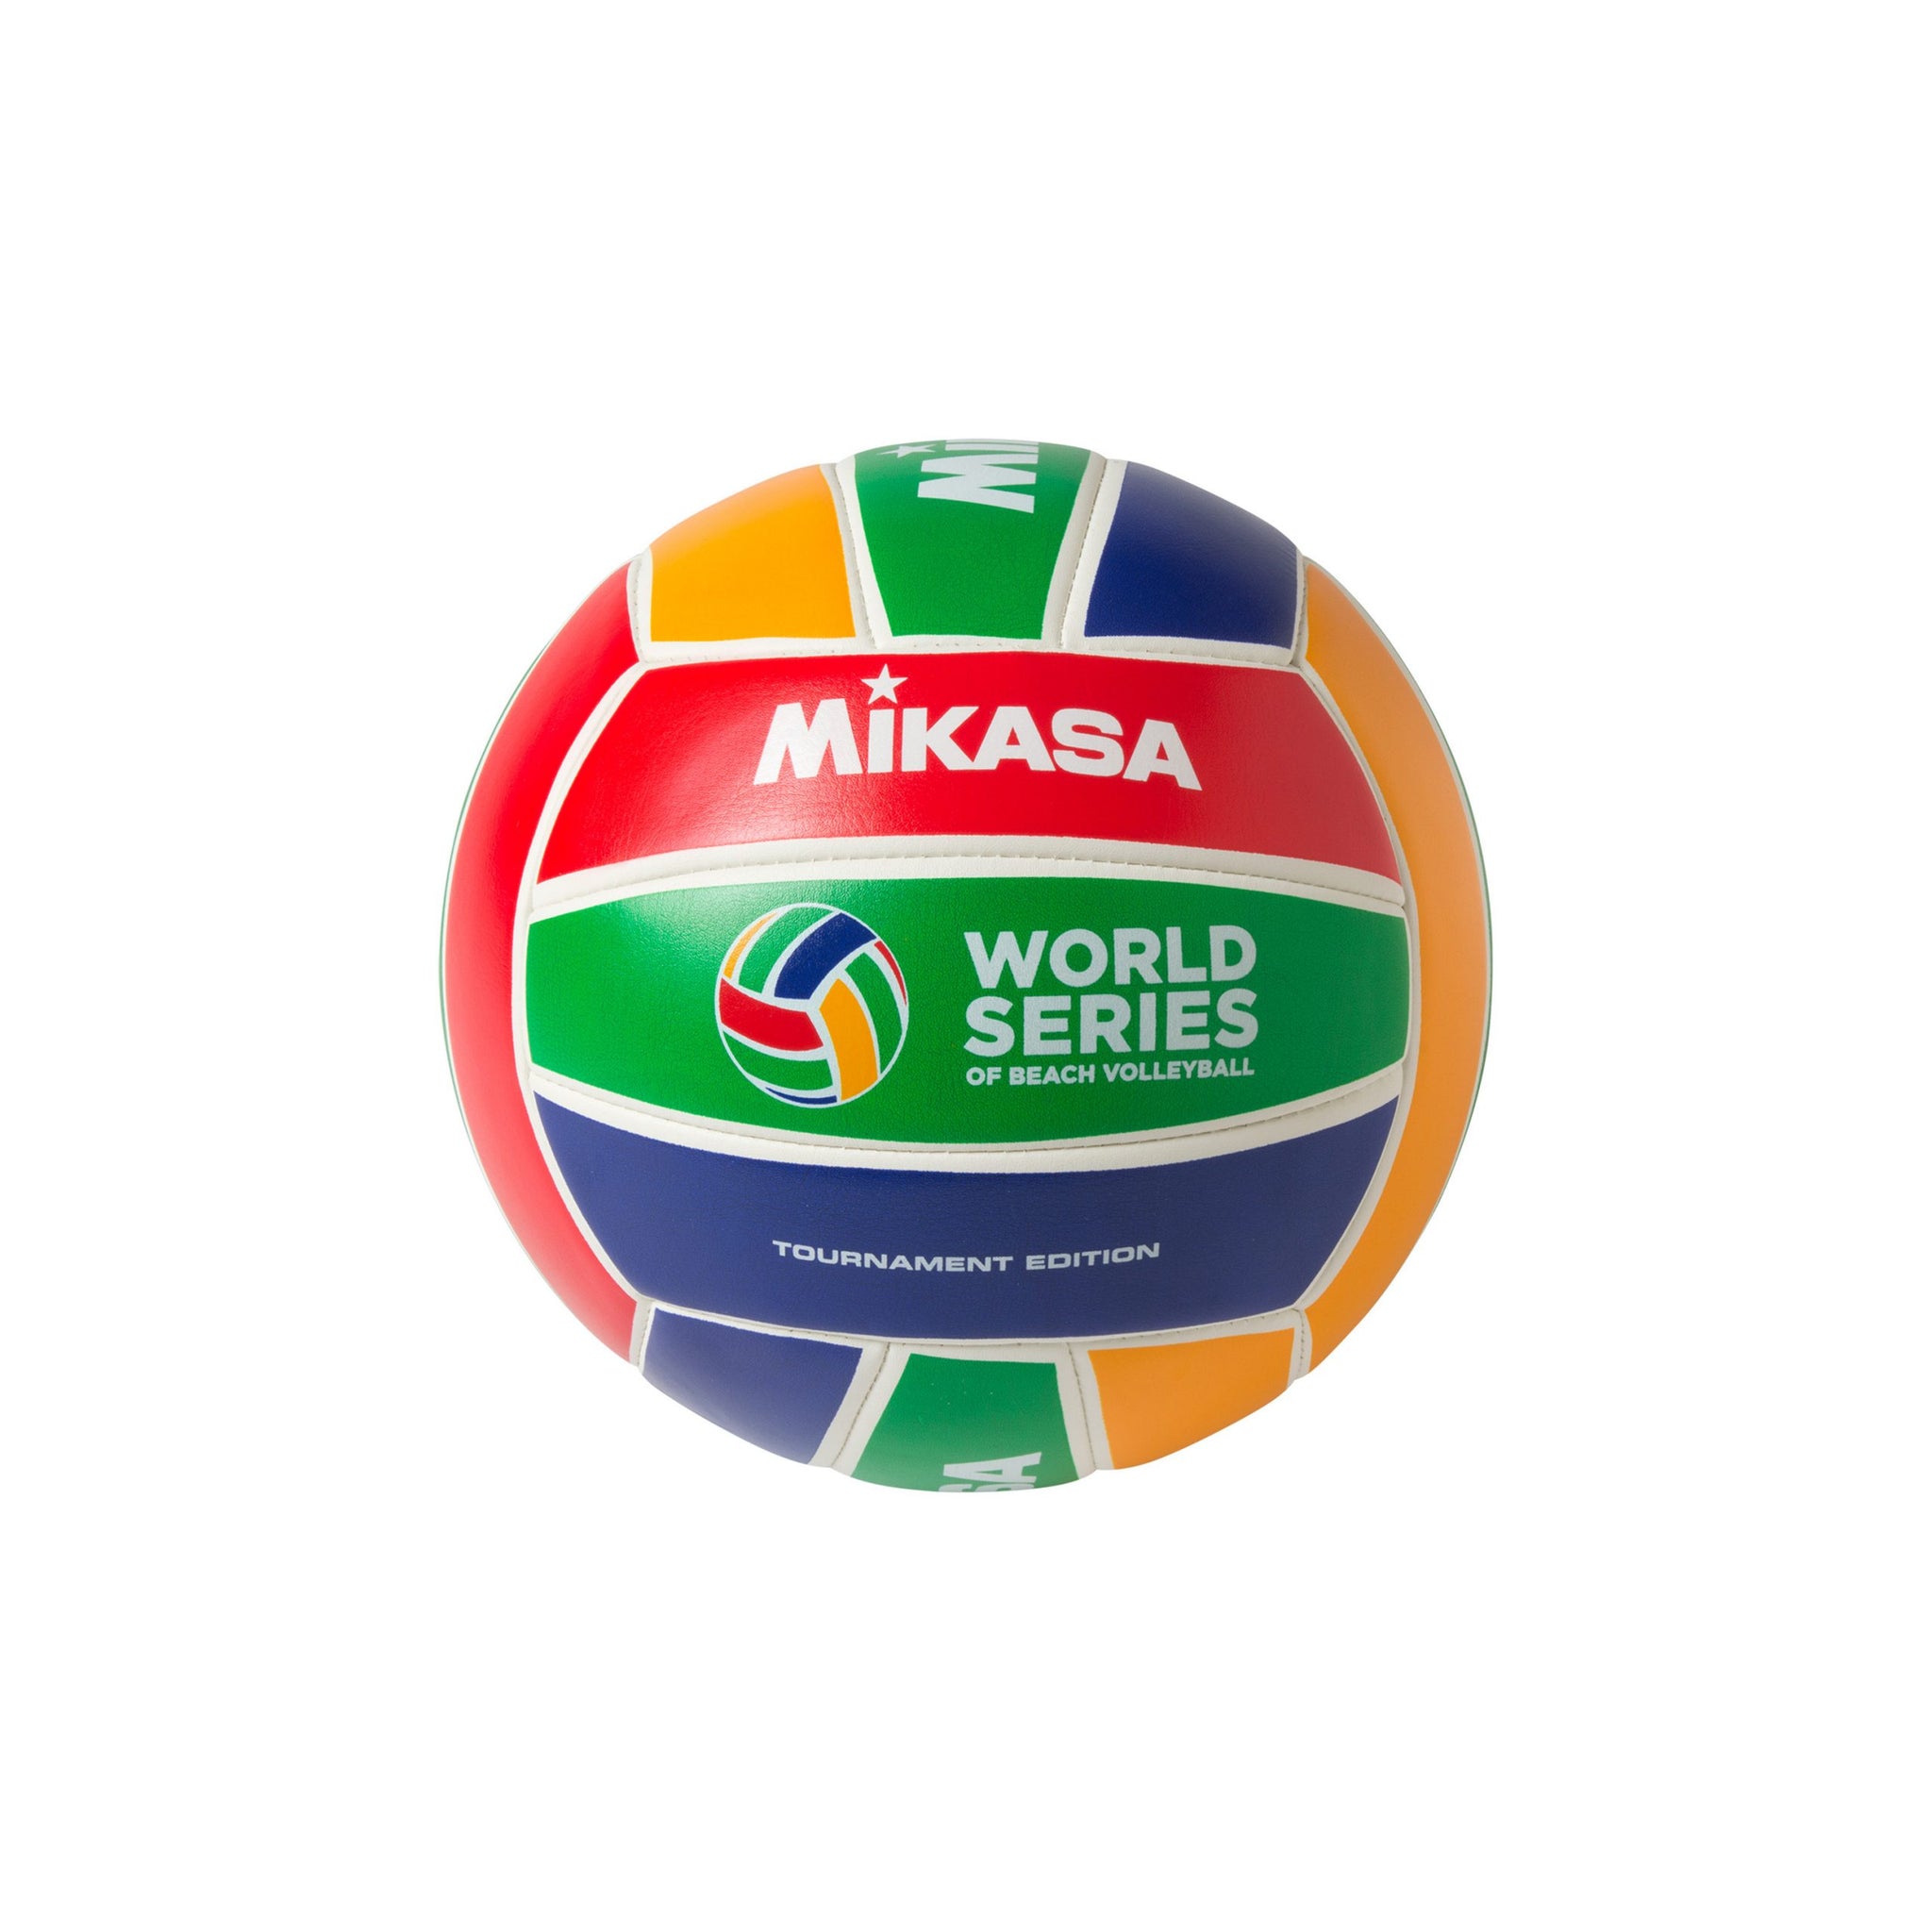 MIKASA World Series Volleyball